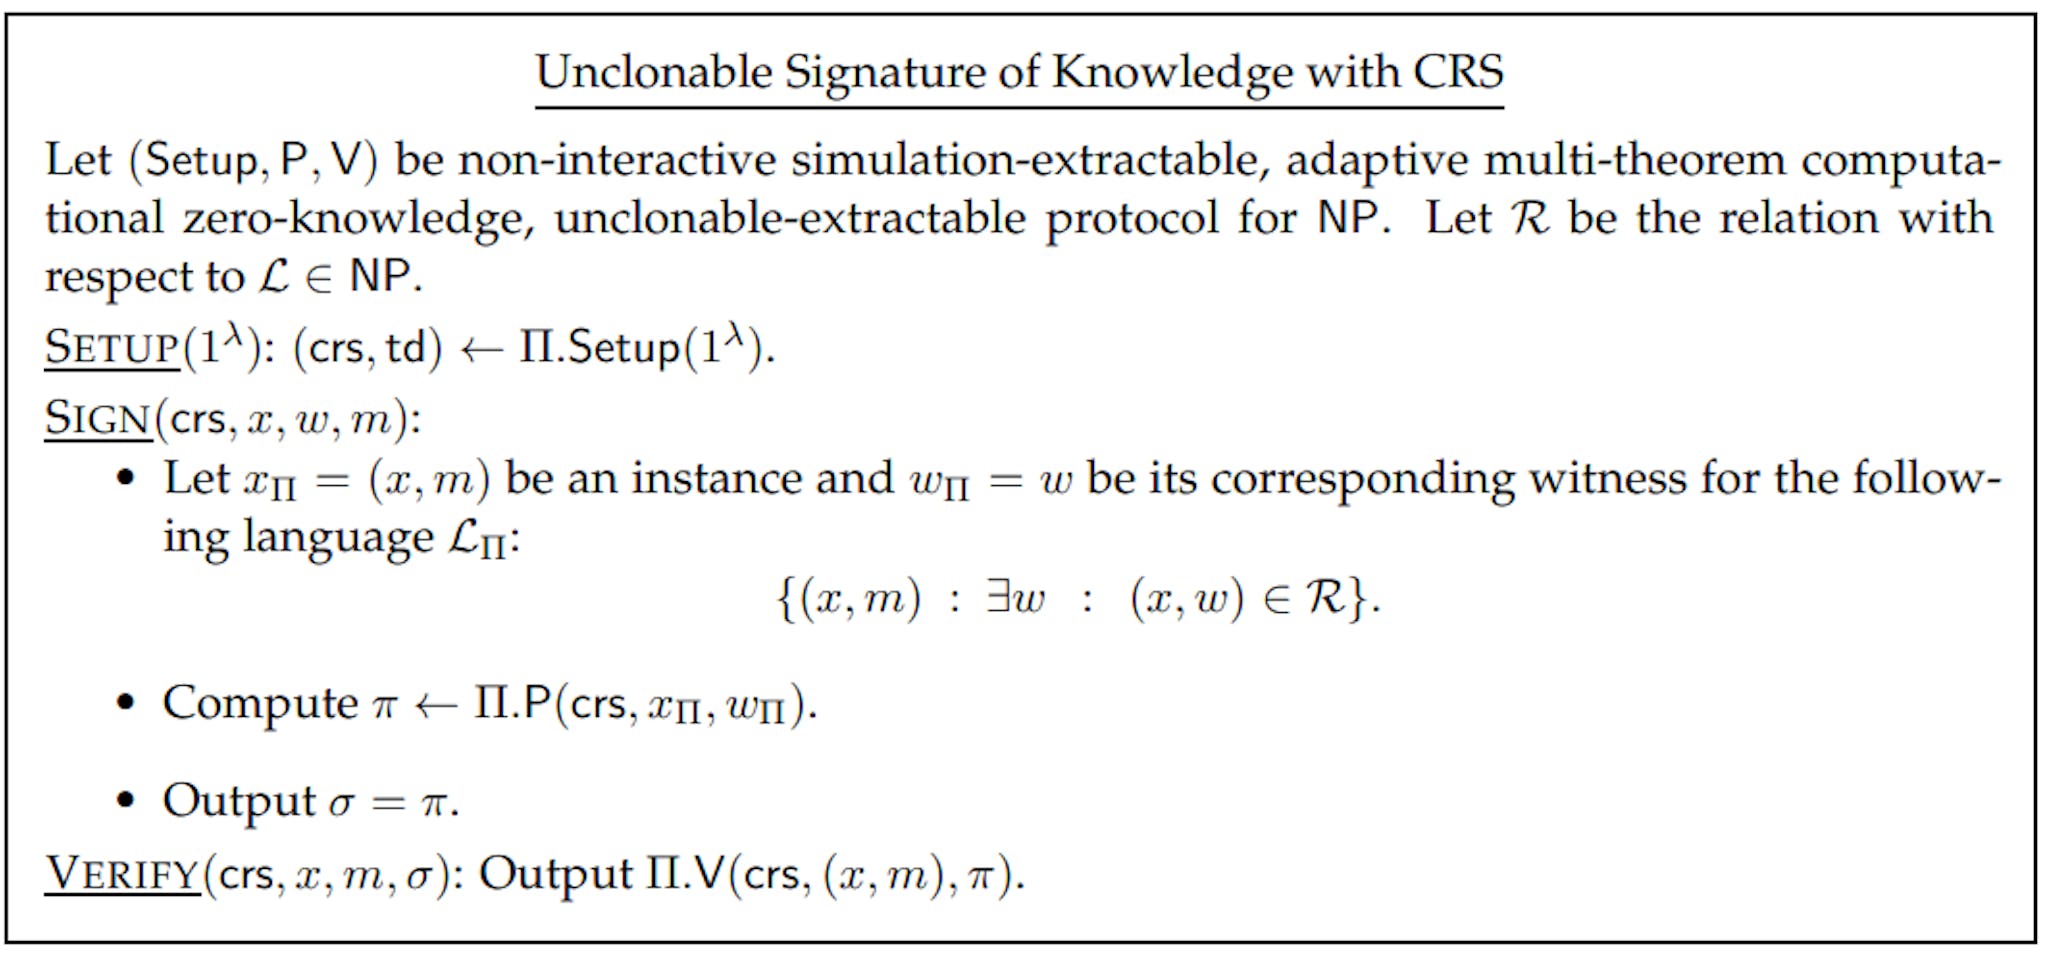 featured image - Unclonable Non-Interactive Zero-Knowledge: Unclonable Signatures of Knowledge